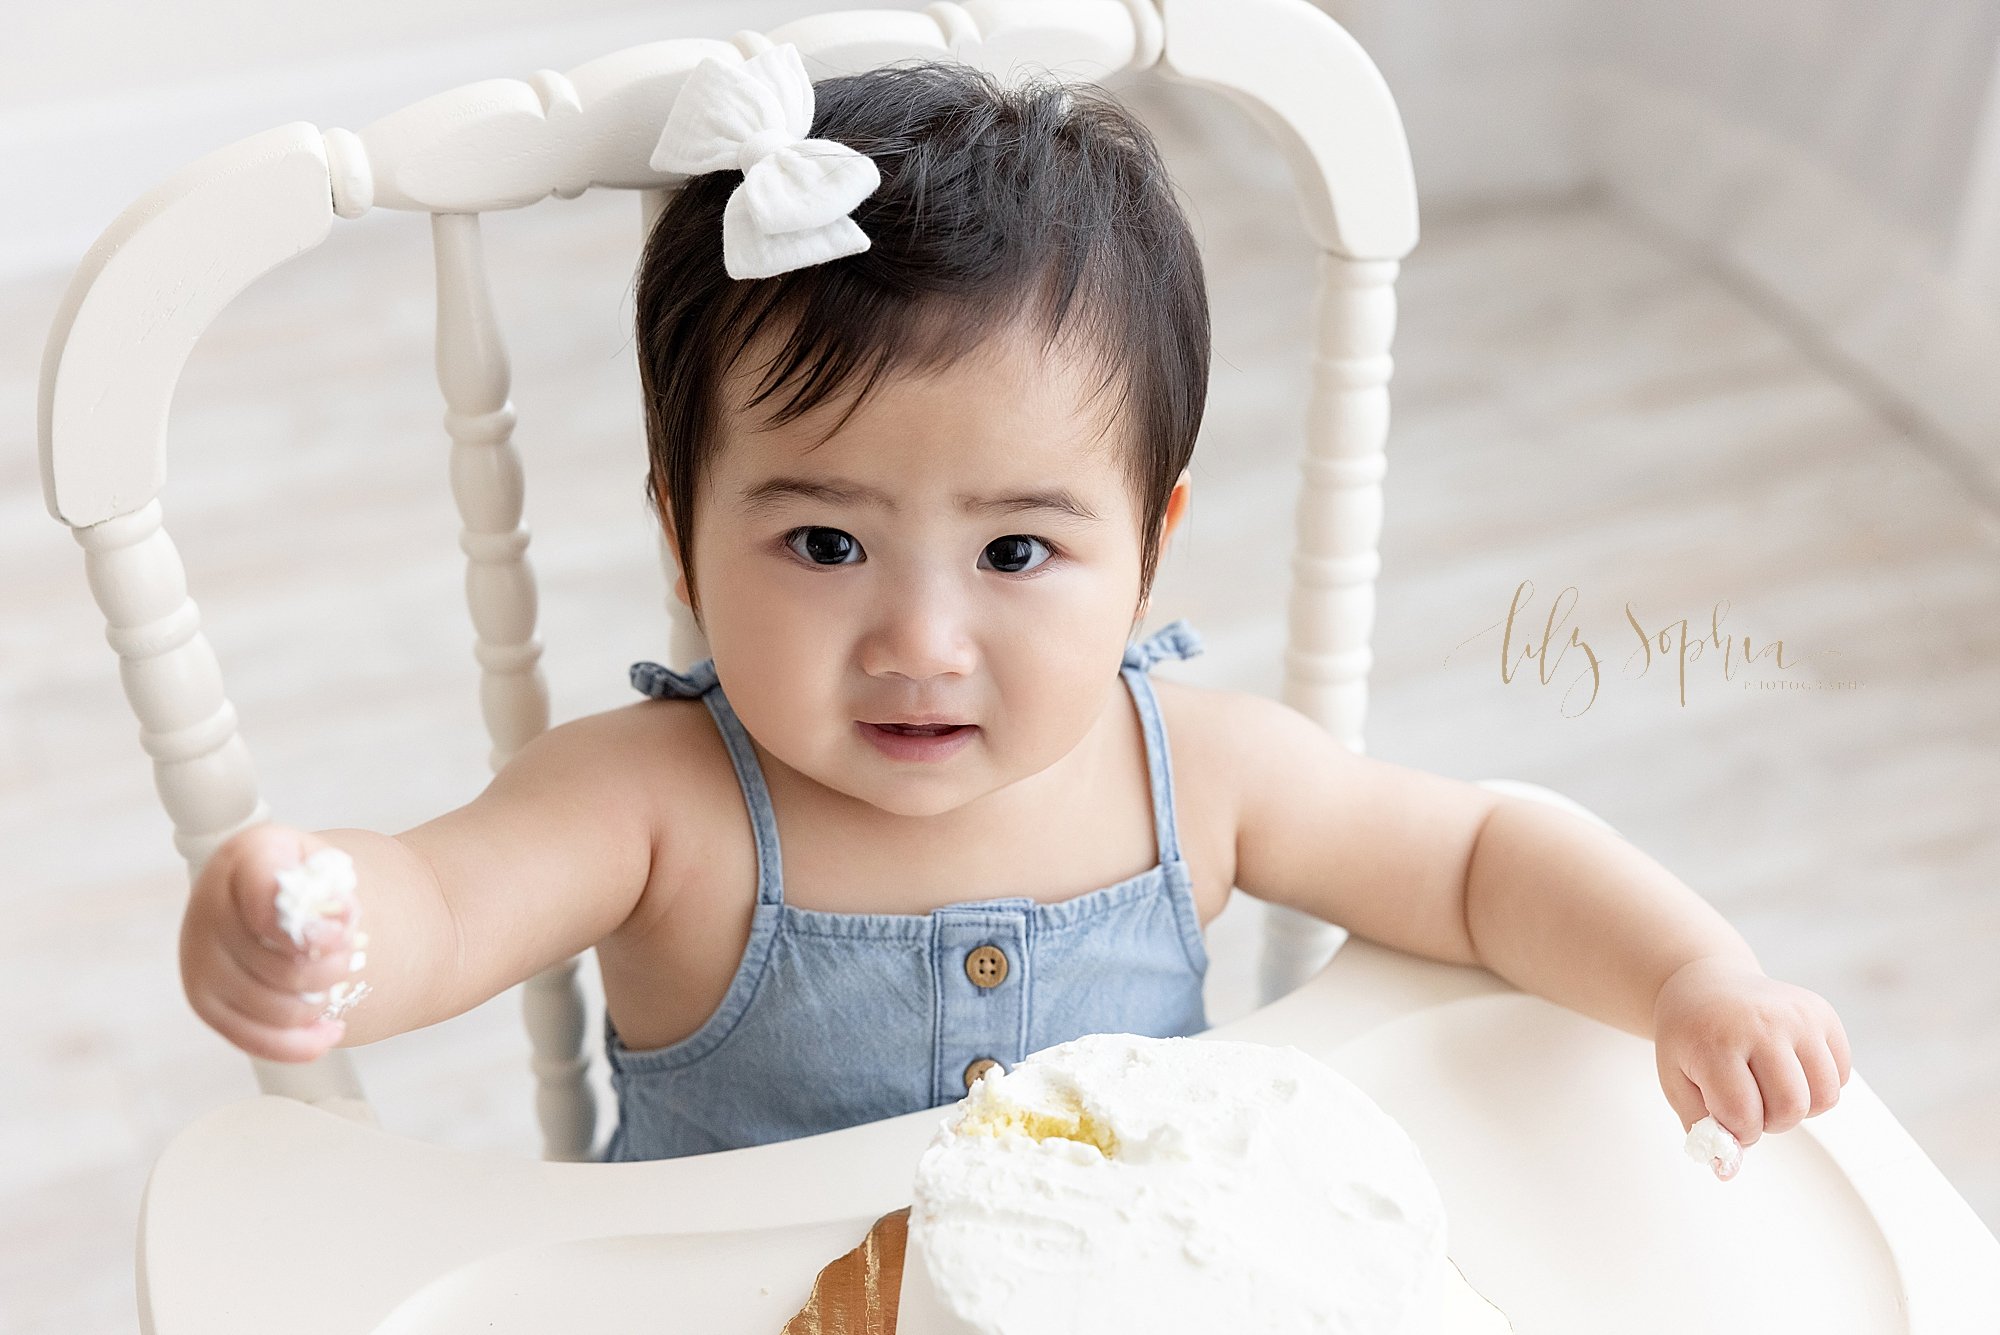 intown-atlanta-decatur-buckhead-studio-family-photoshoot-first-birthday-baby-girl-cake-smash-photoshoot_3509.jpg